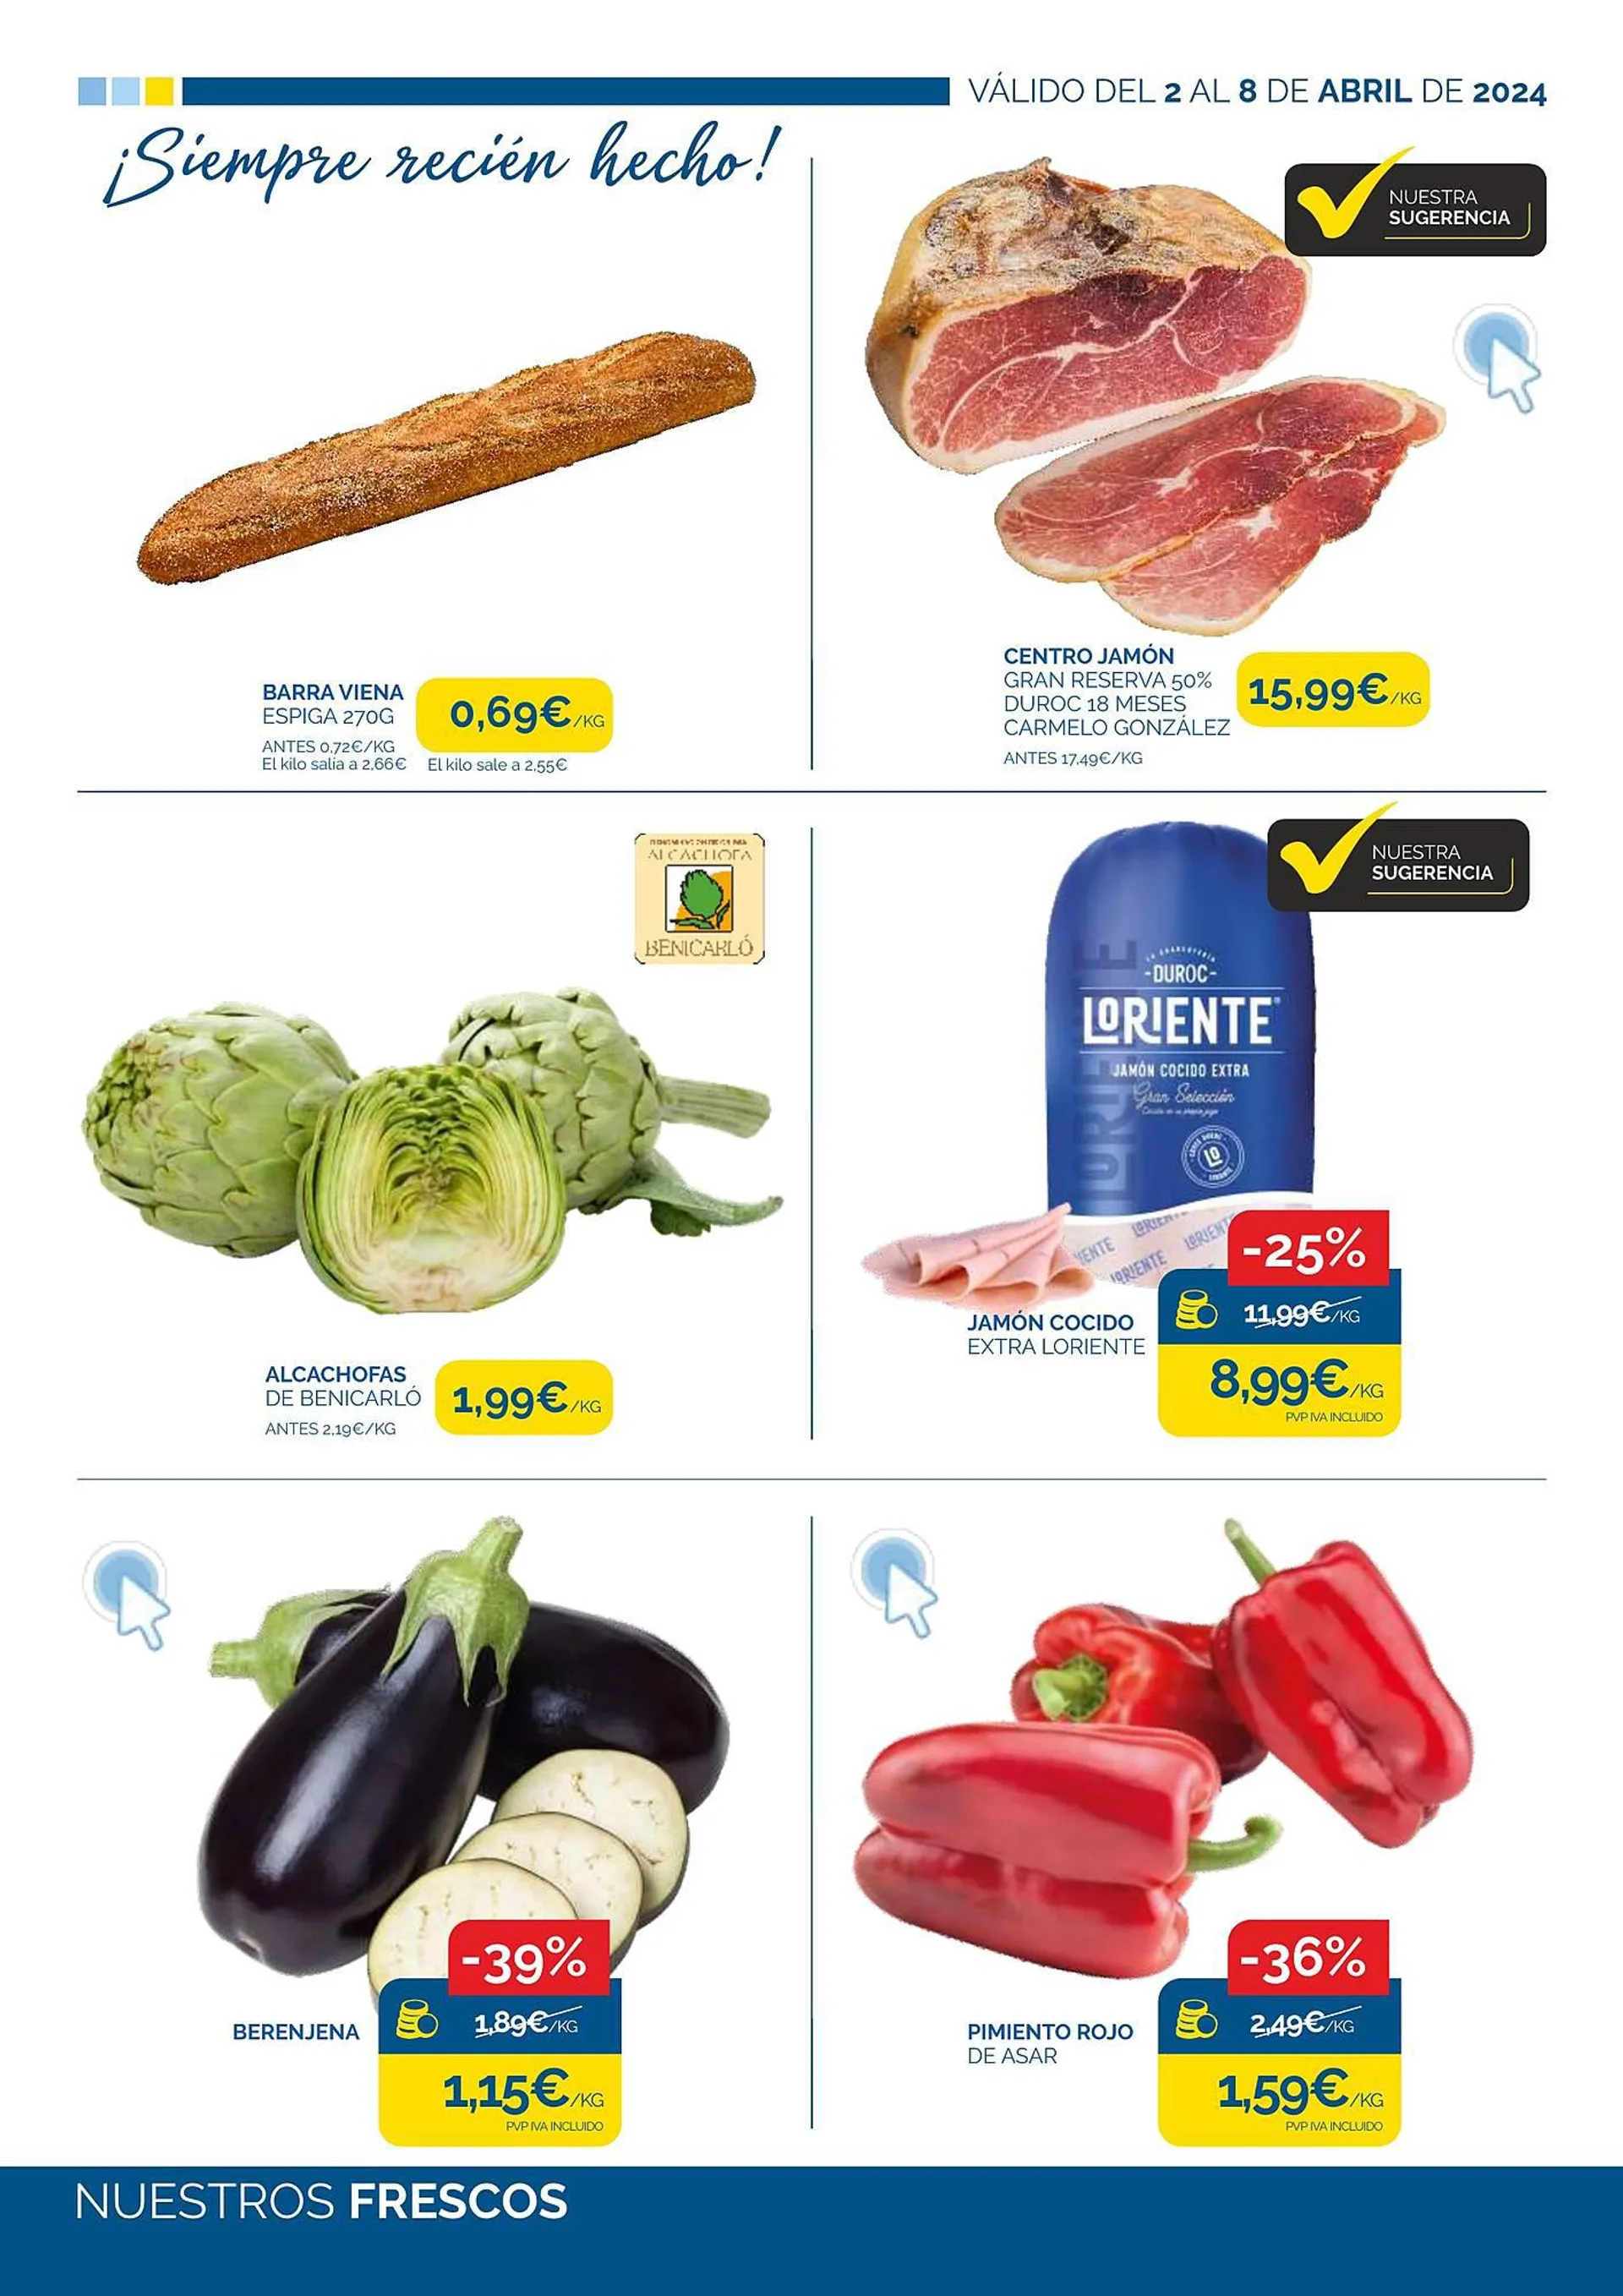 Catálogo de Folleto Supermercados La Despensa 2 de abril al 8 de abril 2024 - Página 2